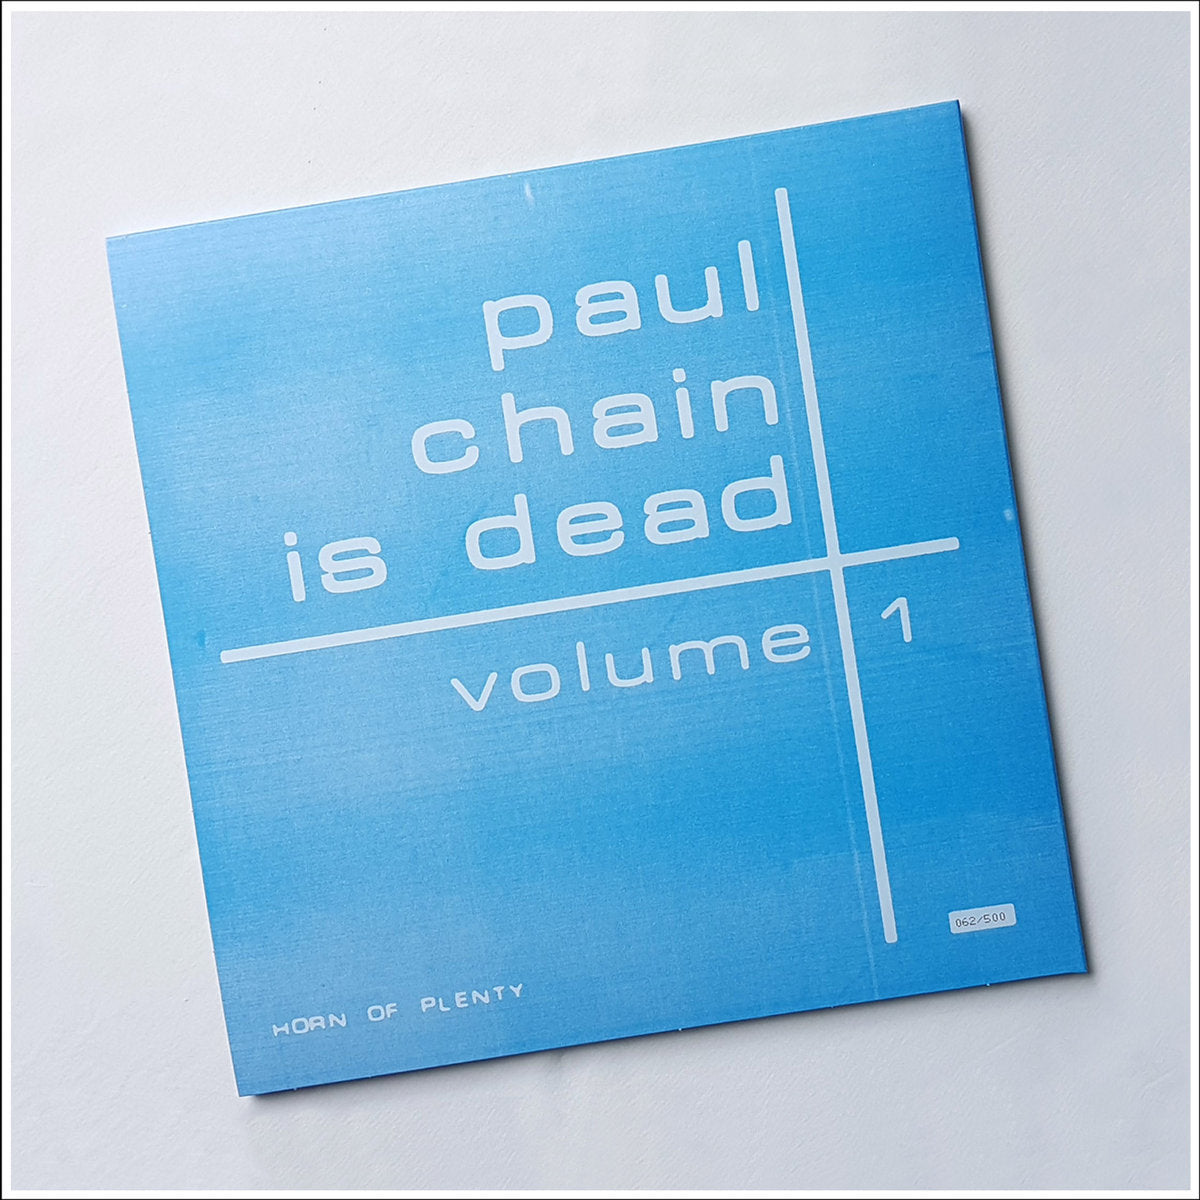 Is Dead Volume 1 - Paul Chain